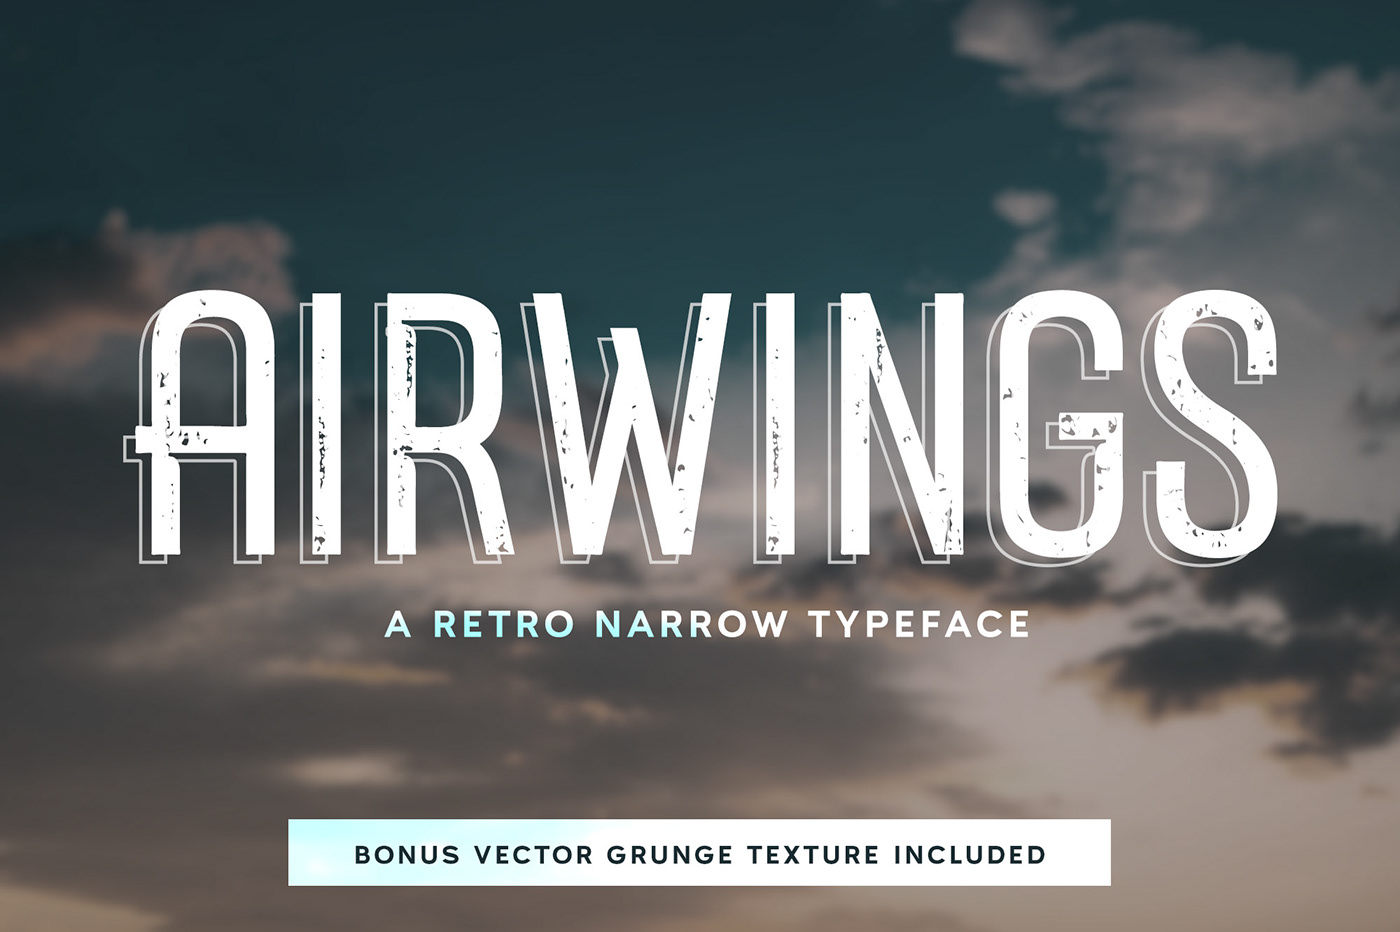 RETRO FONTS vintage style ultra condensed World war 2 aviation Grunge font Grunge Texture Distressed Rugged design texture font